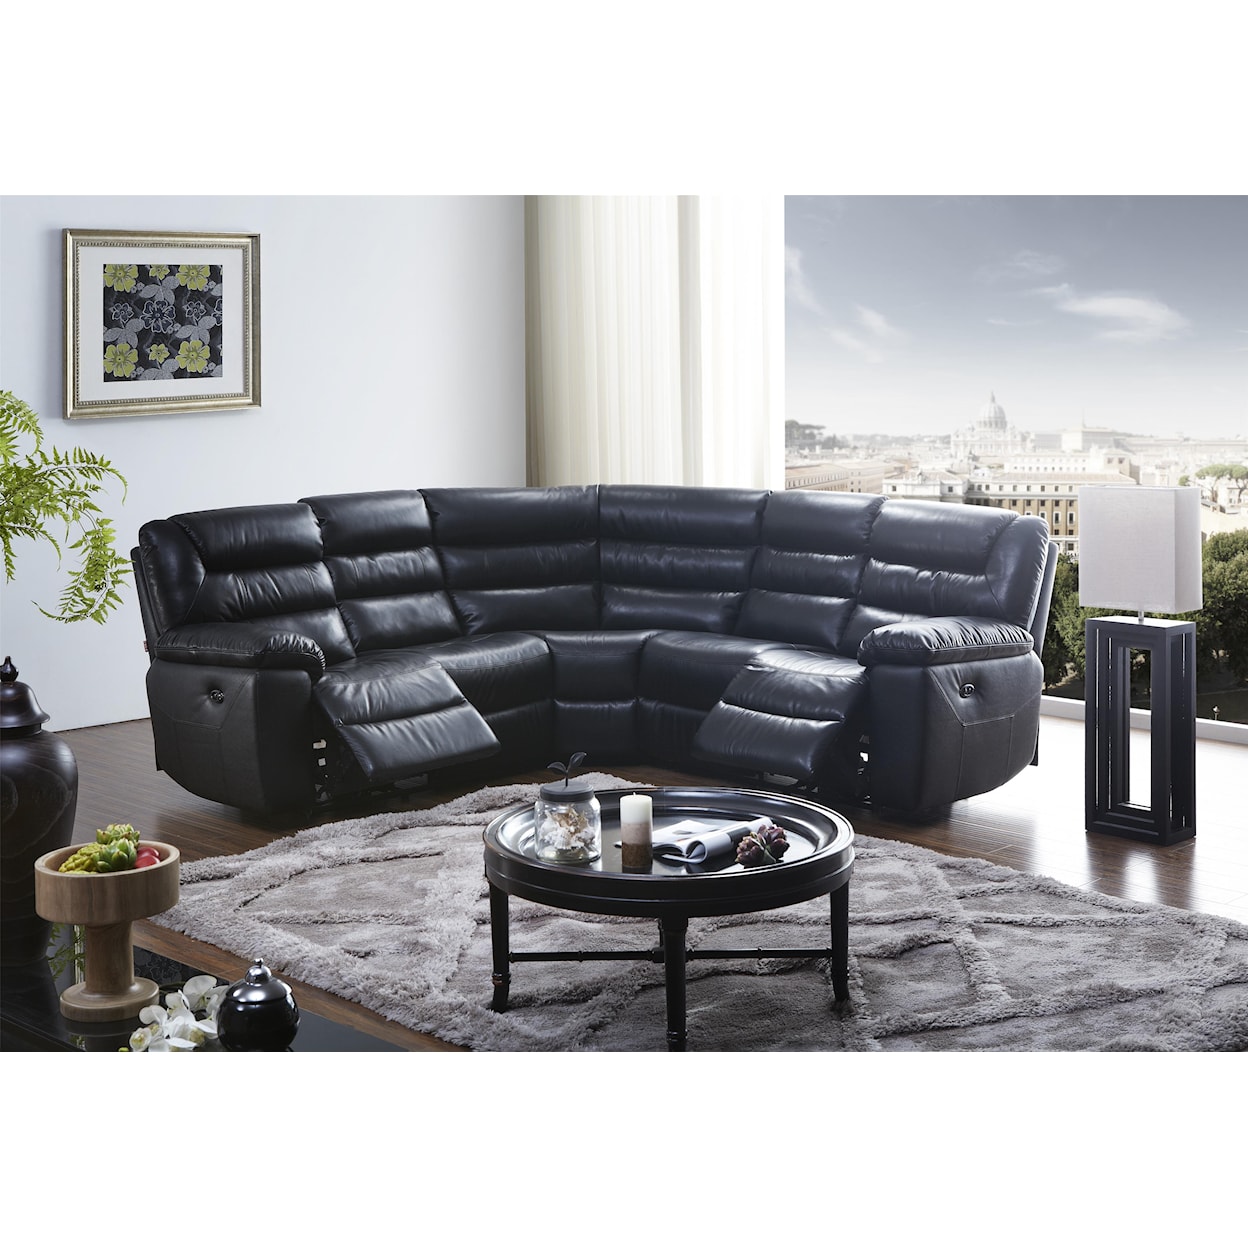 Kuka Home 1711 5 Pc Reclining Sectional Sofa